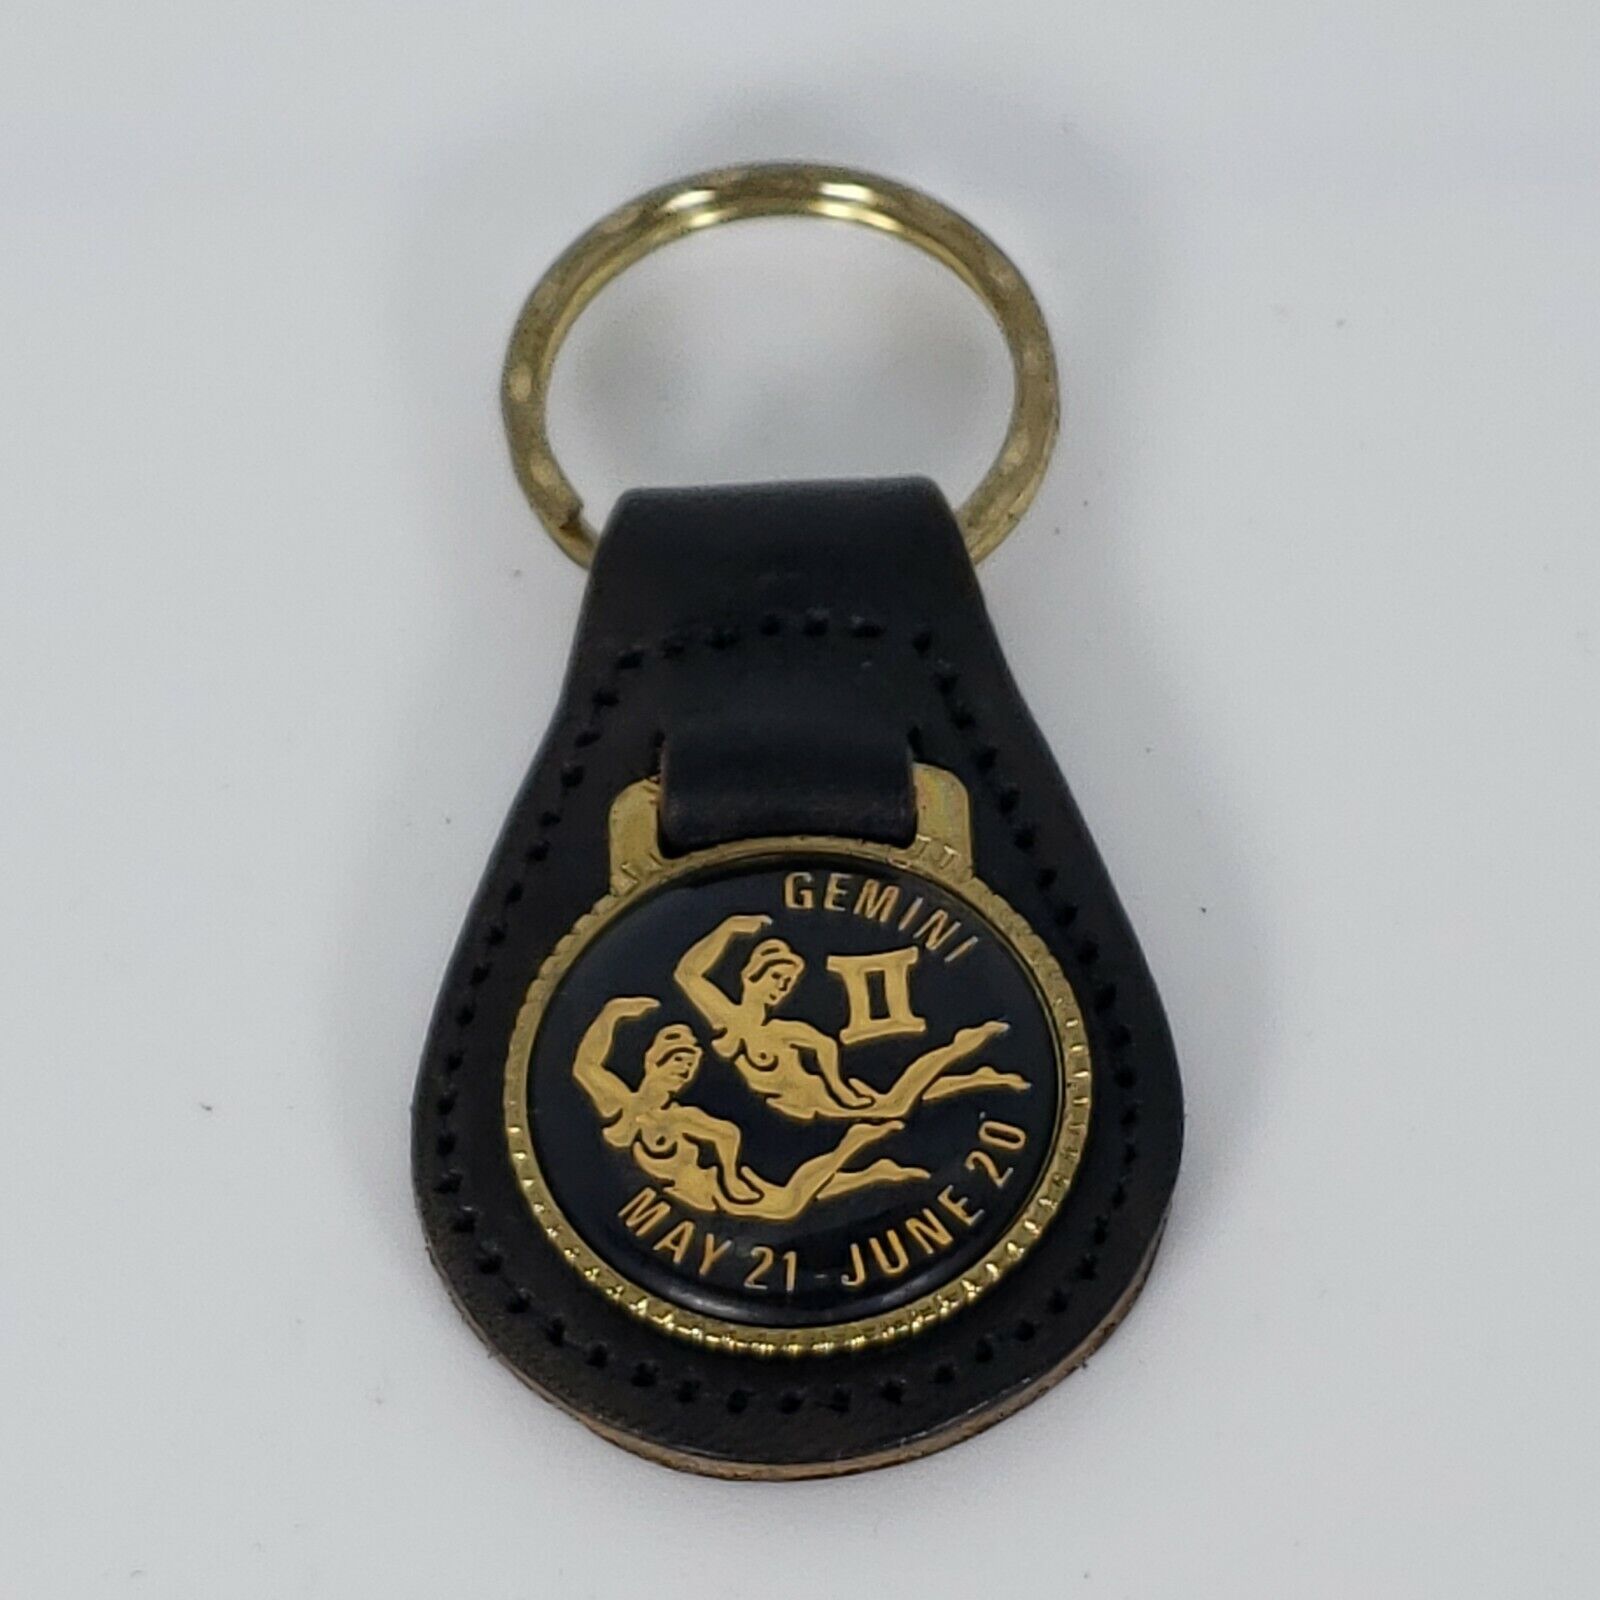 Vintage Gemini Horiscope Leather Keychain NOS Key Ring Key Fob May21 - June02